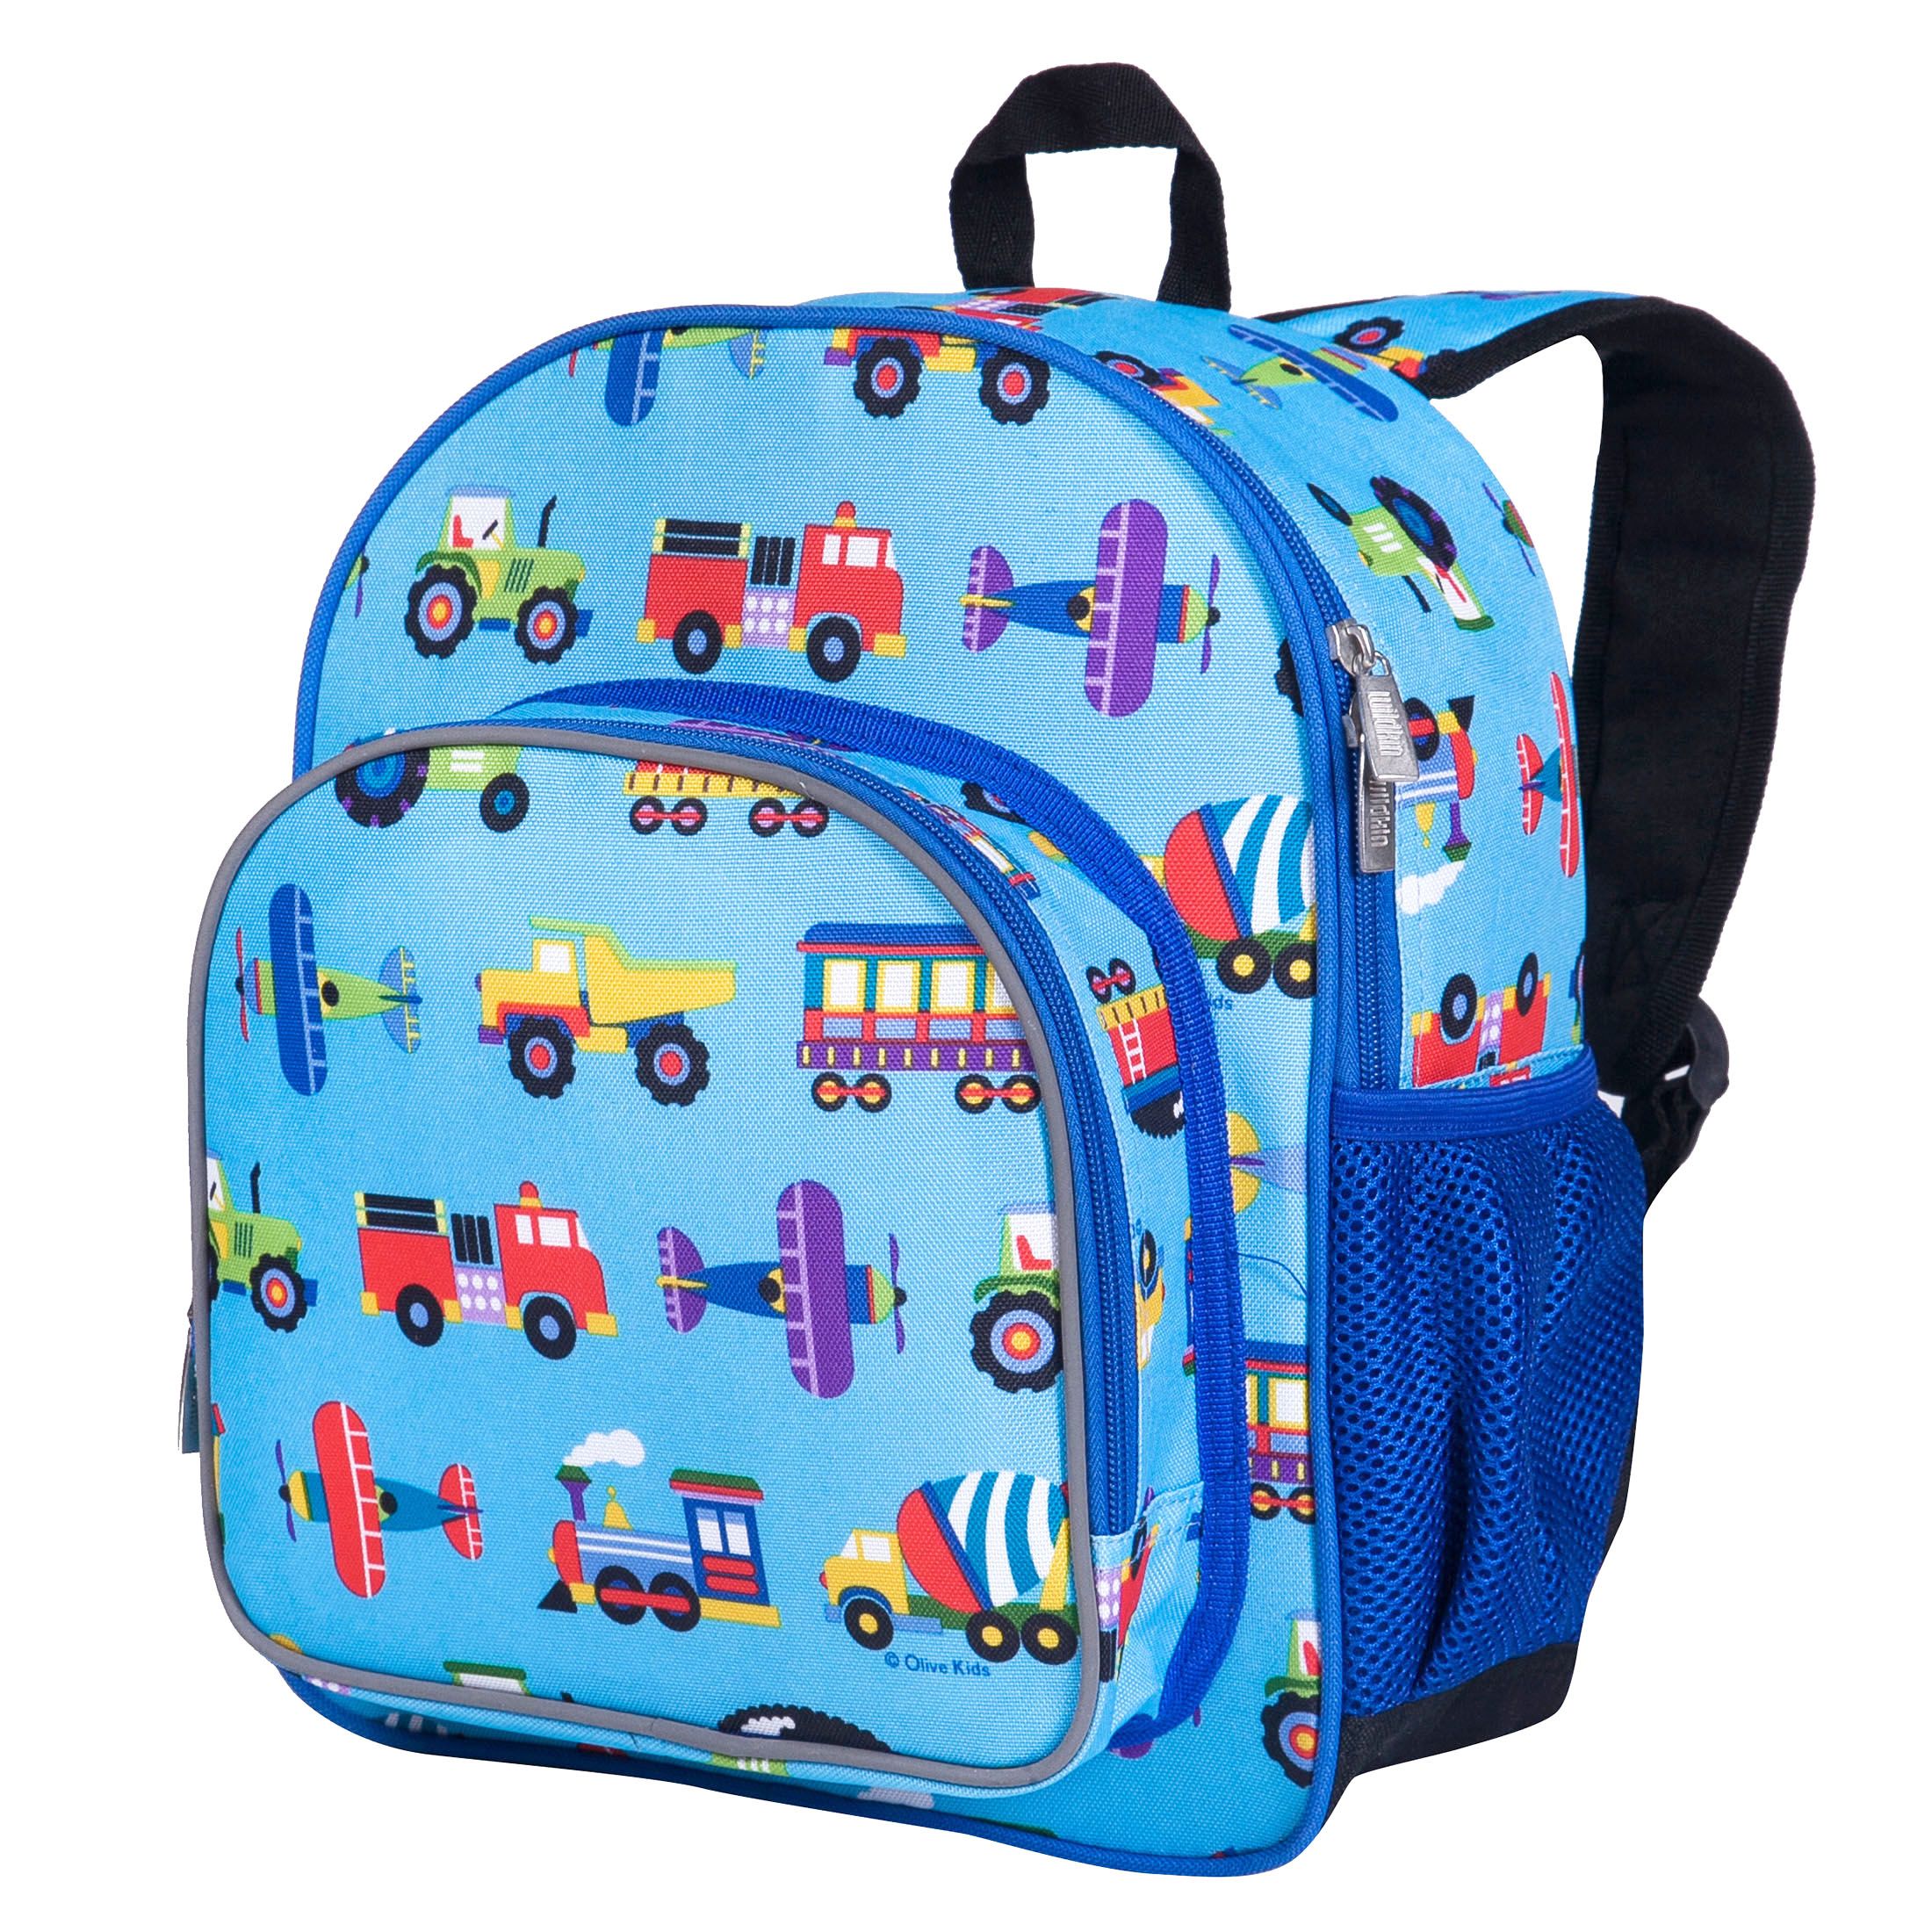 Mini School Bag Bookbag for 3-5 Years Boys and Girls… HAPPYSUNNY Toddler Backpack Reversible Sequin 13 Inch Lightweight for Preschool and Kindergarten Children Kid Backpack 